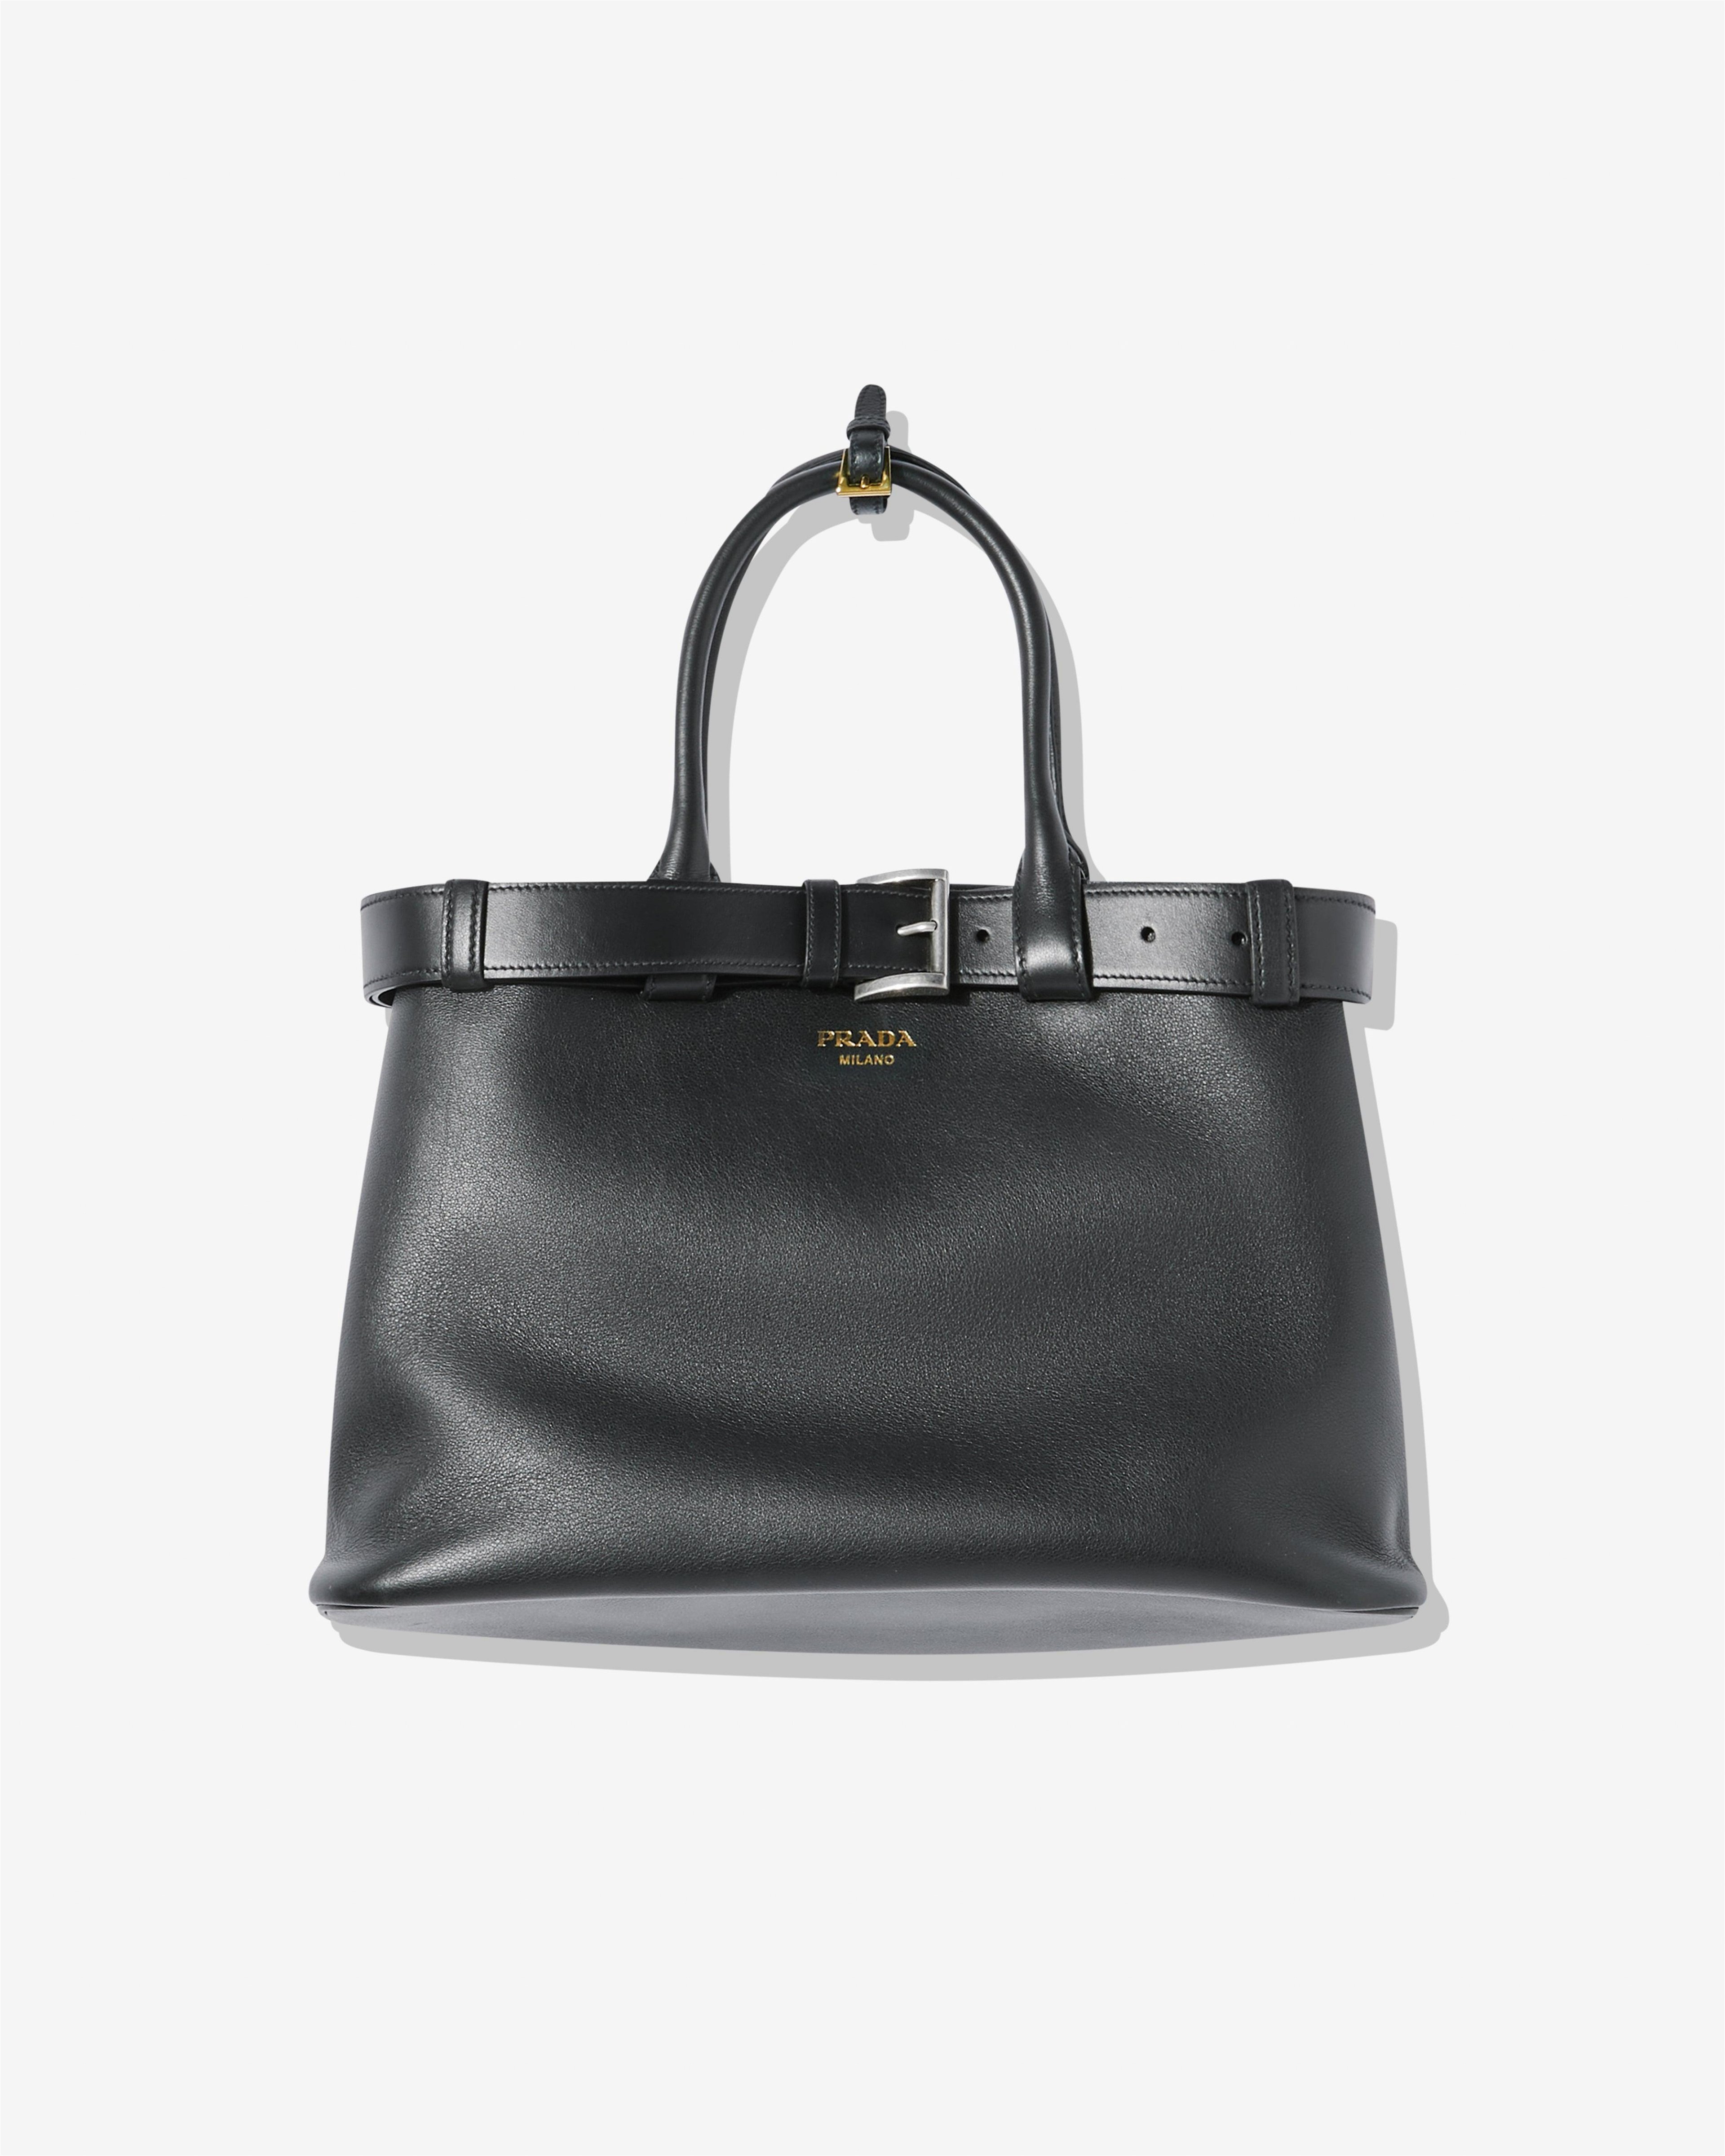 Prada - Buckle Large Leather Handbag with Belt - (Black) by PRADA